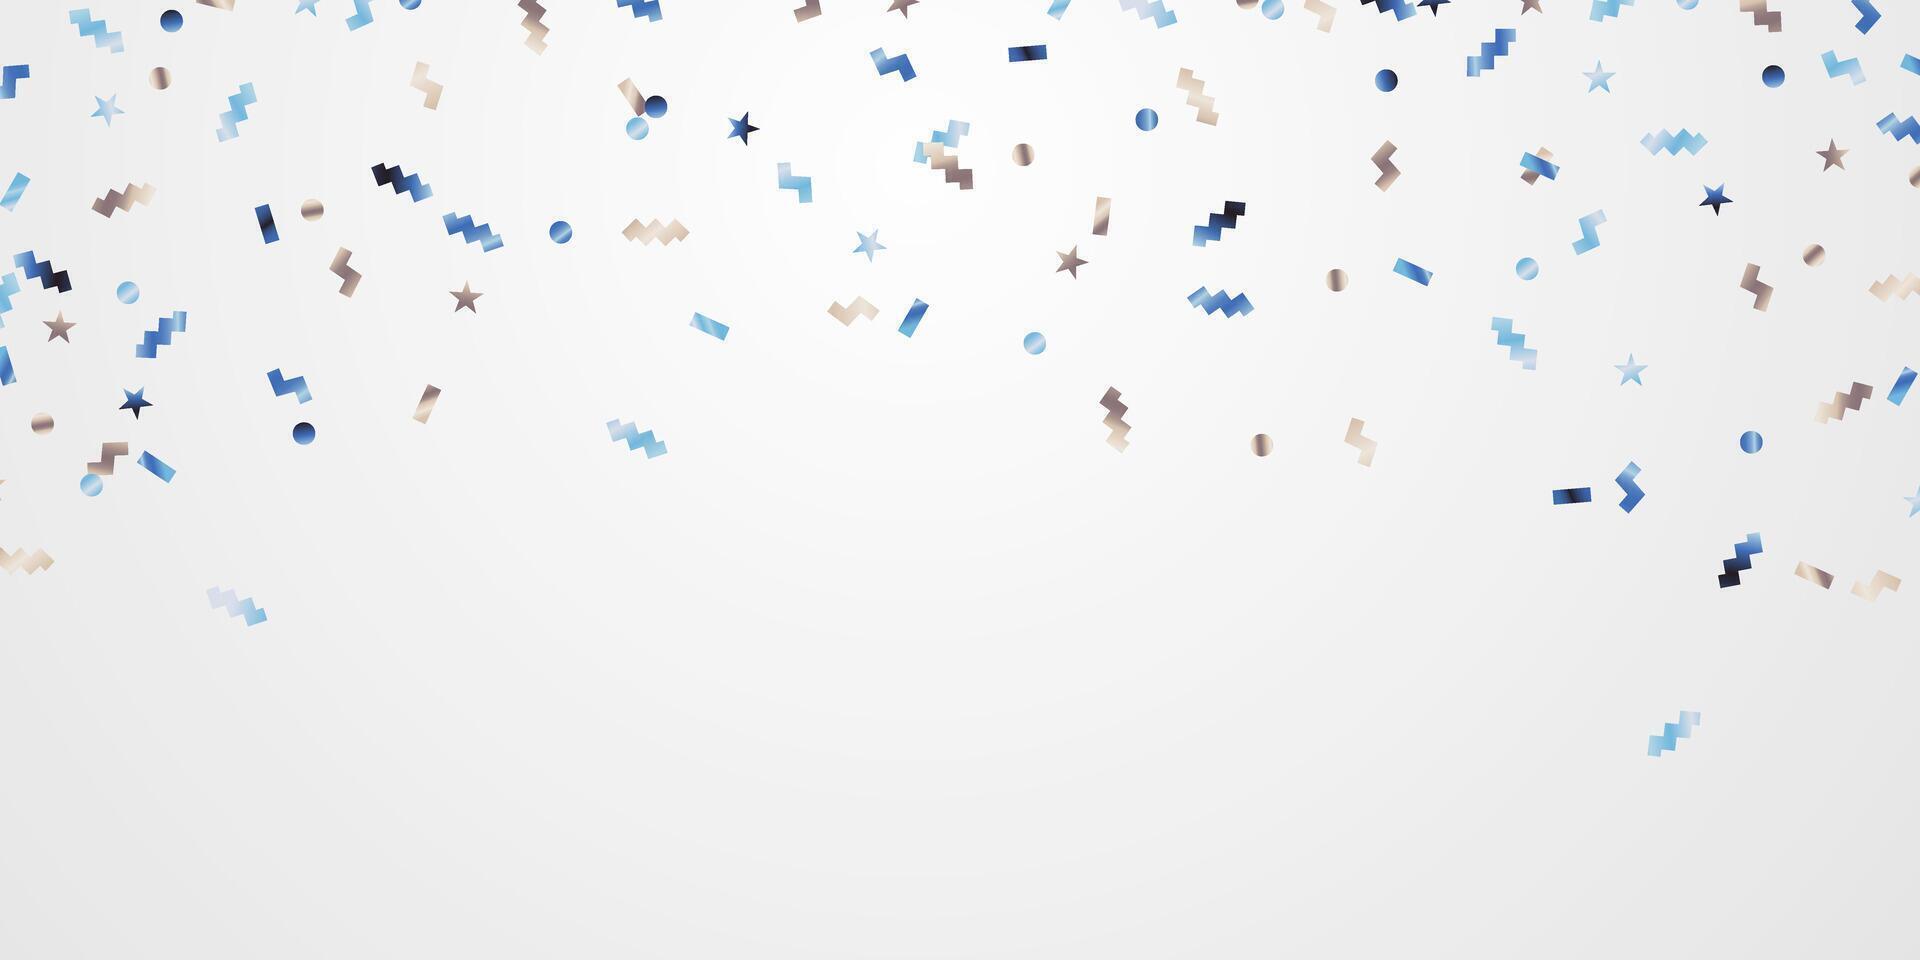 mooi blauw confetti achtergrond voor viering partij vector illustratie